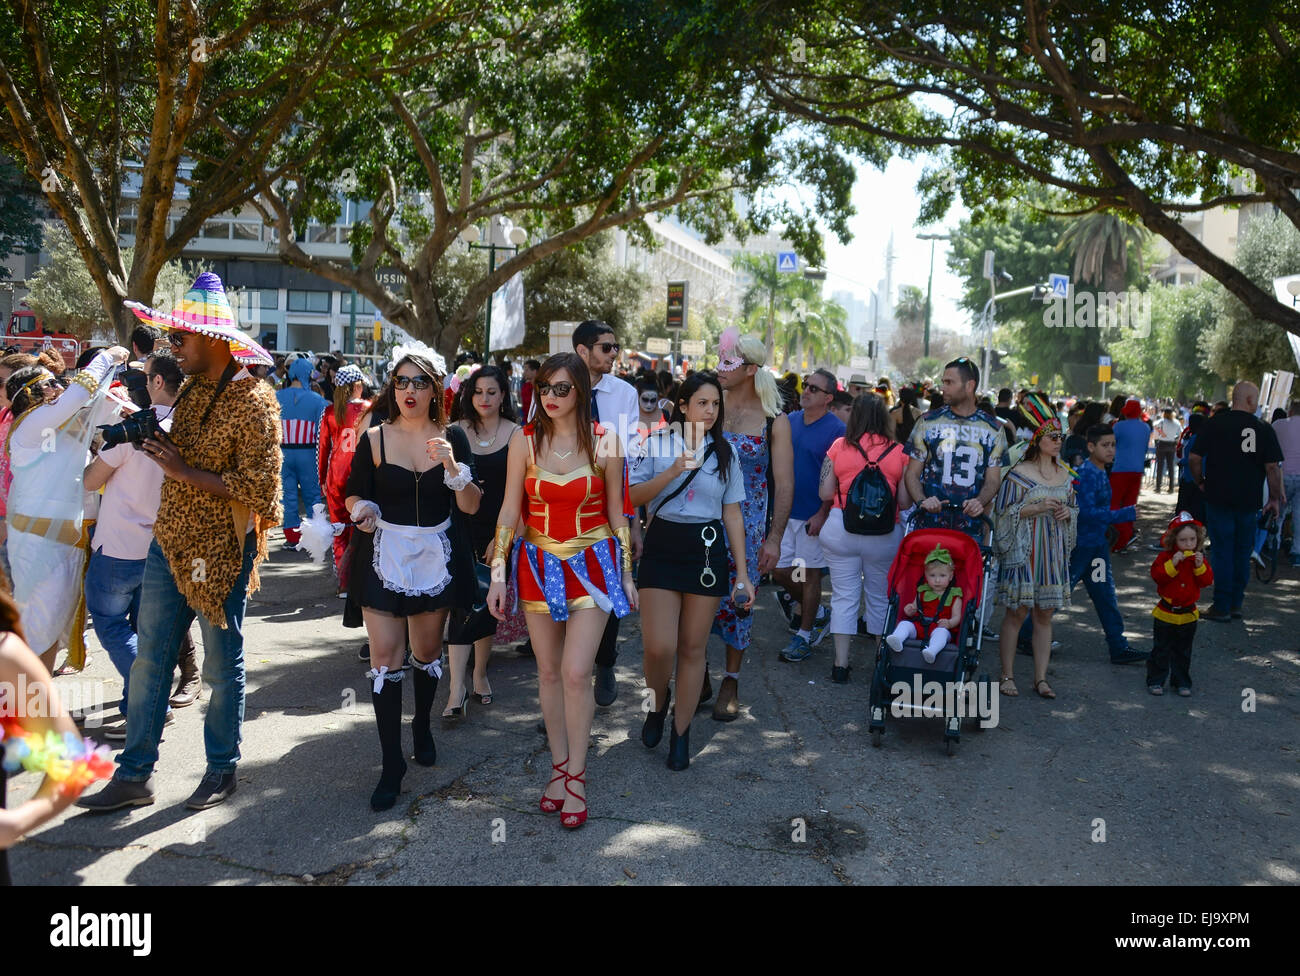 Tel Aviv, Israel - March 6, 2015: Unidentified people having fun on Purim street party. Stock Photo